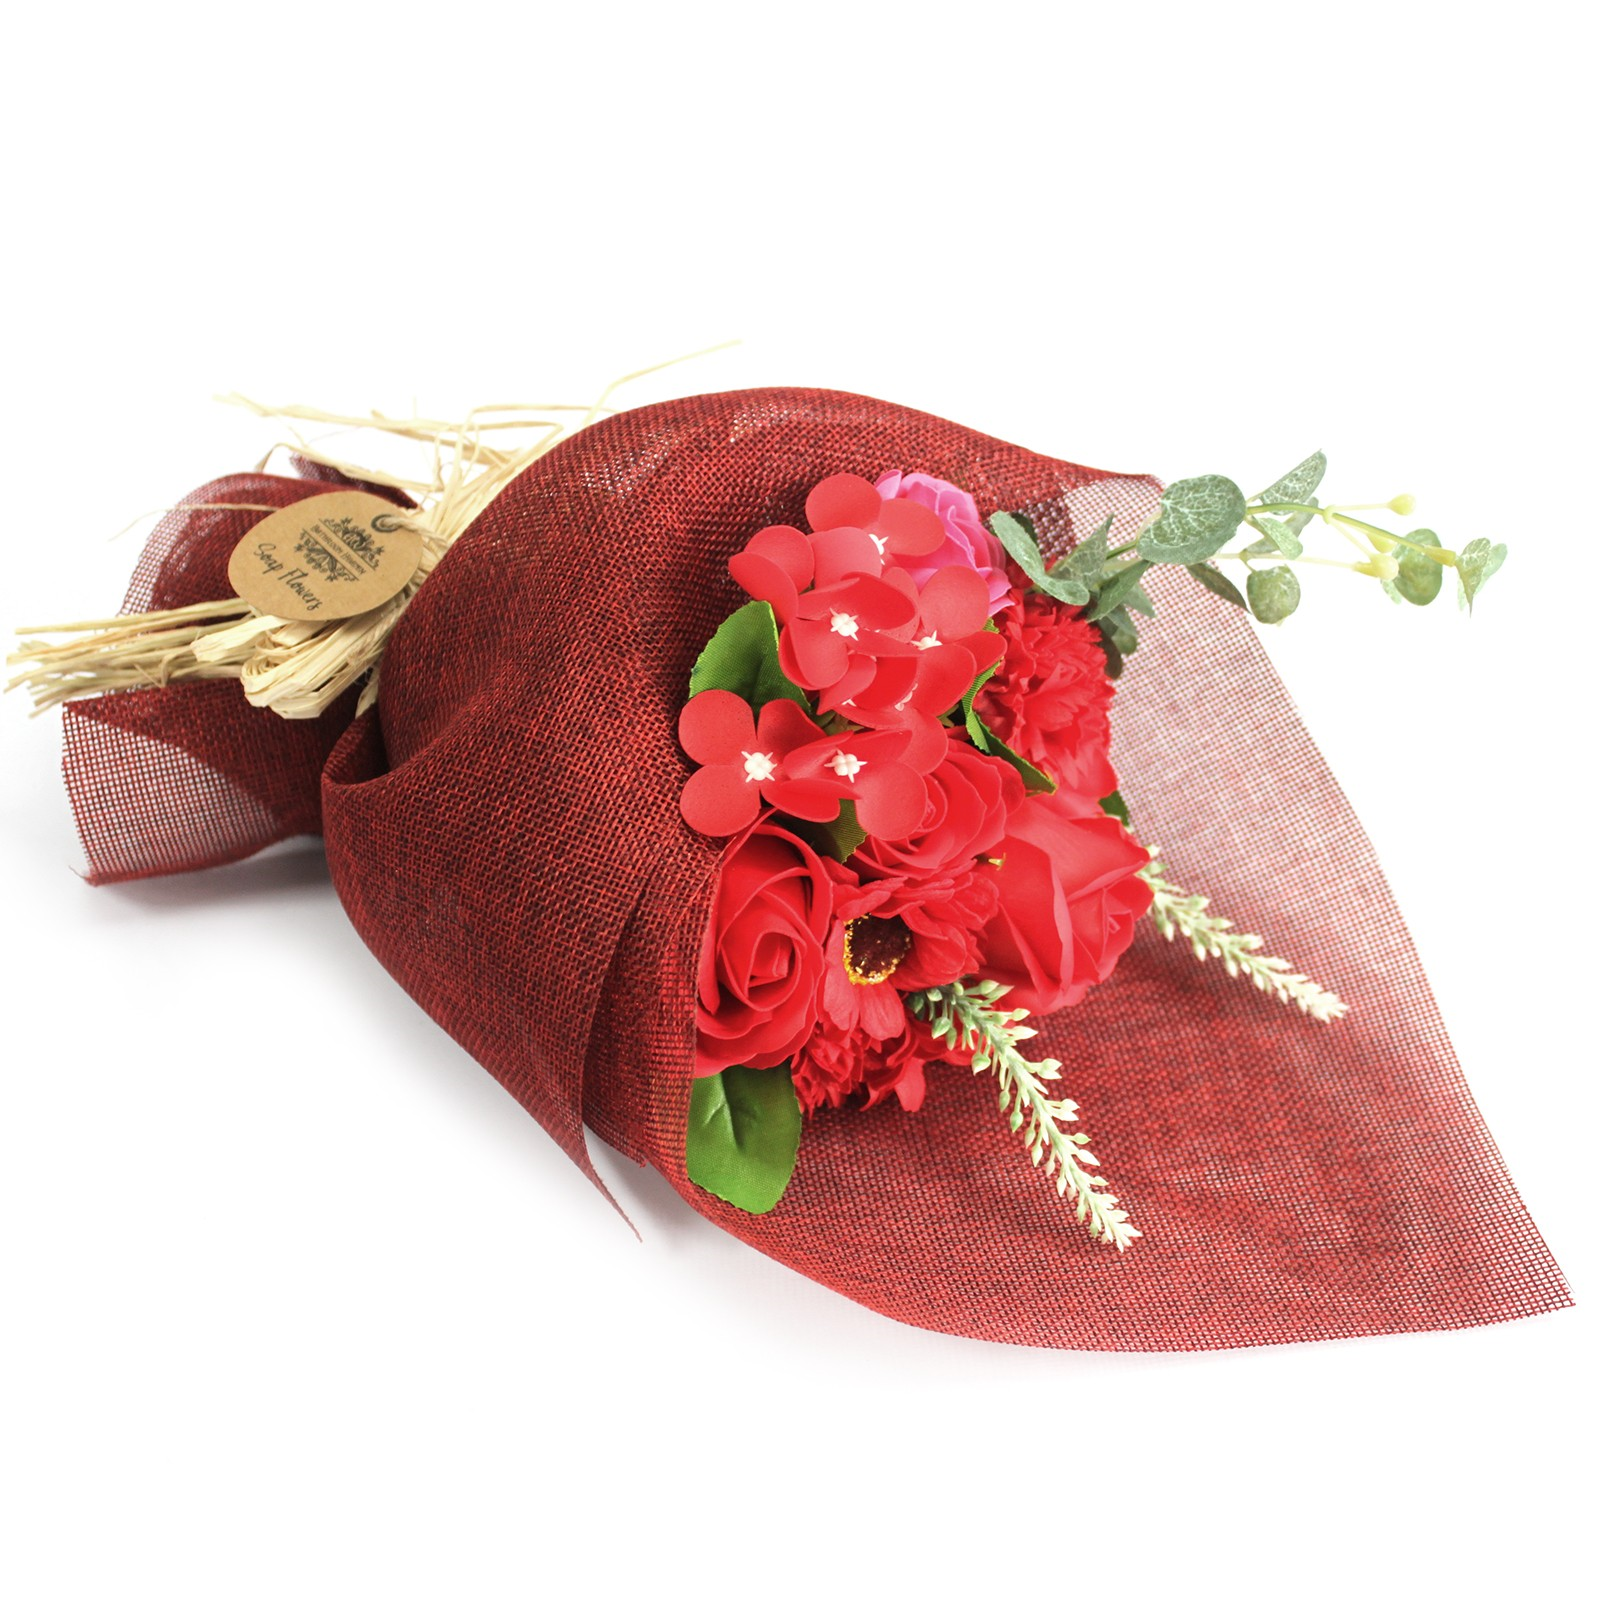 Red soap flower bouquet